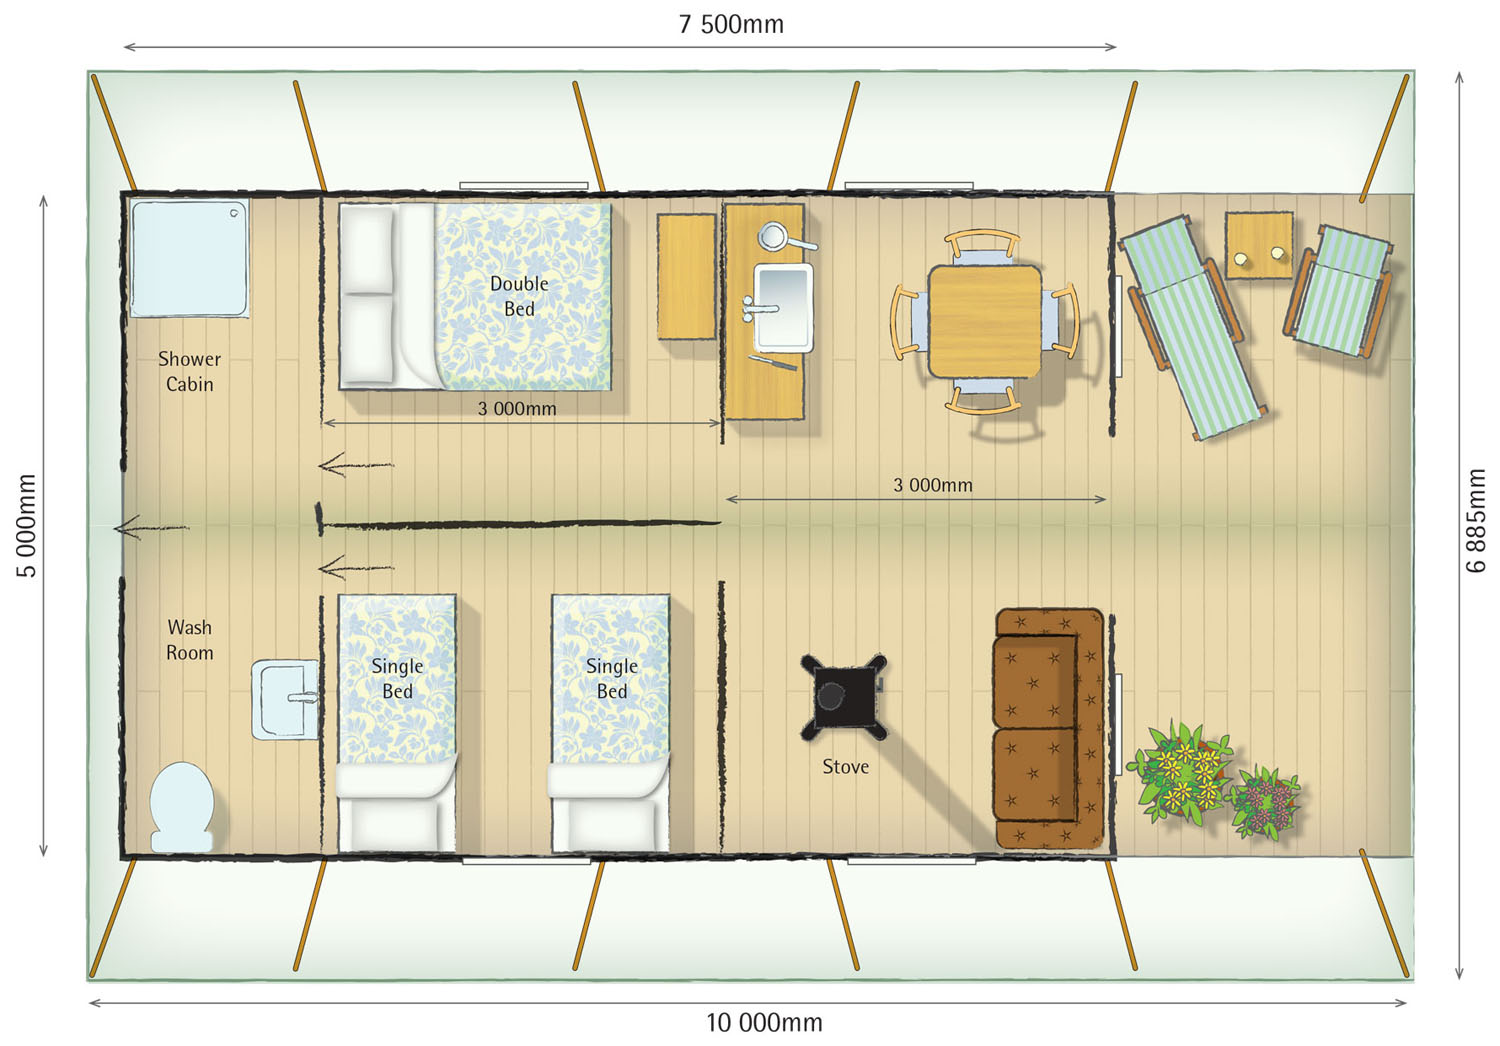 Bond Fabrications Mini Safari Tent with Bathroom Extension Floorplan